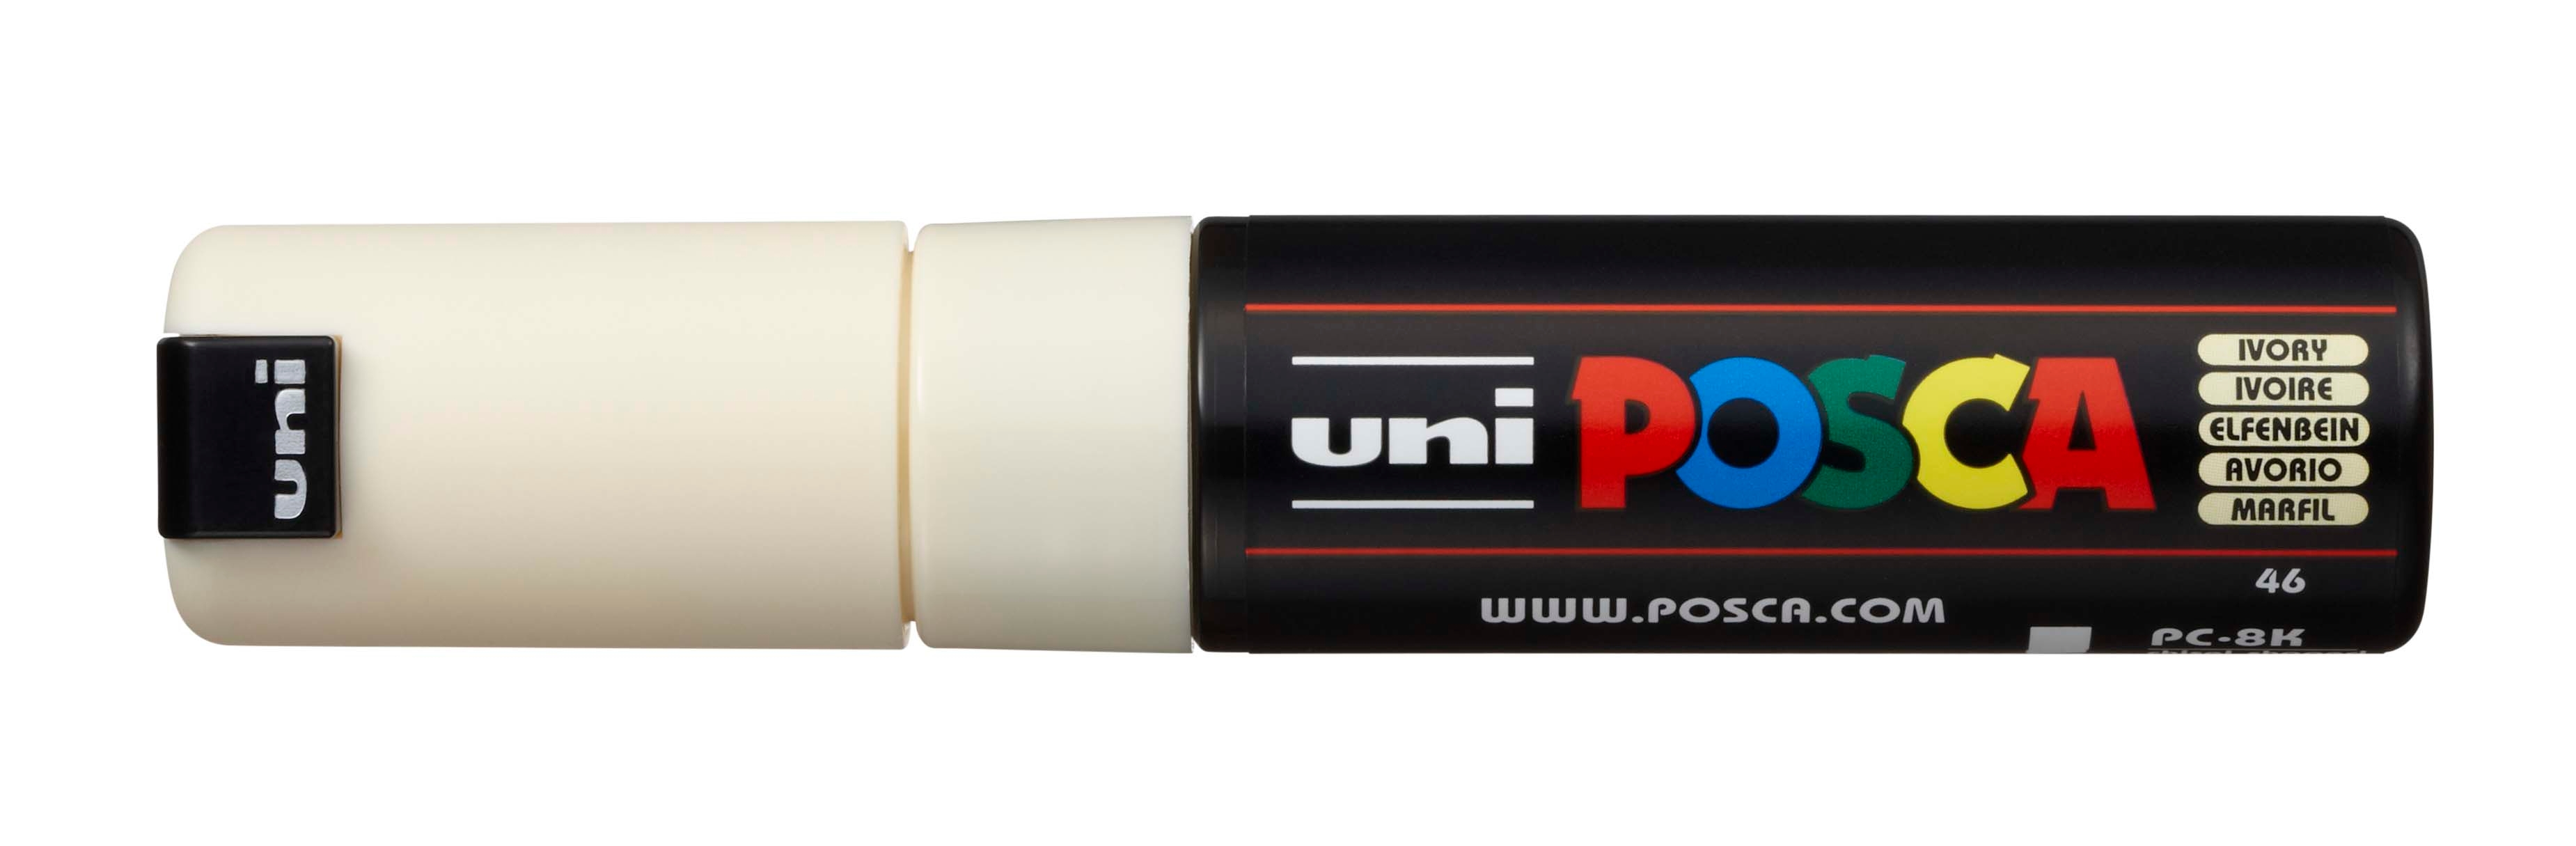 UNI-BALL Posca Marker 8mm PC-8K IVORY ivoire